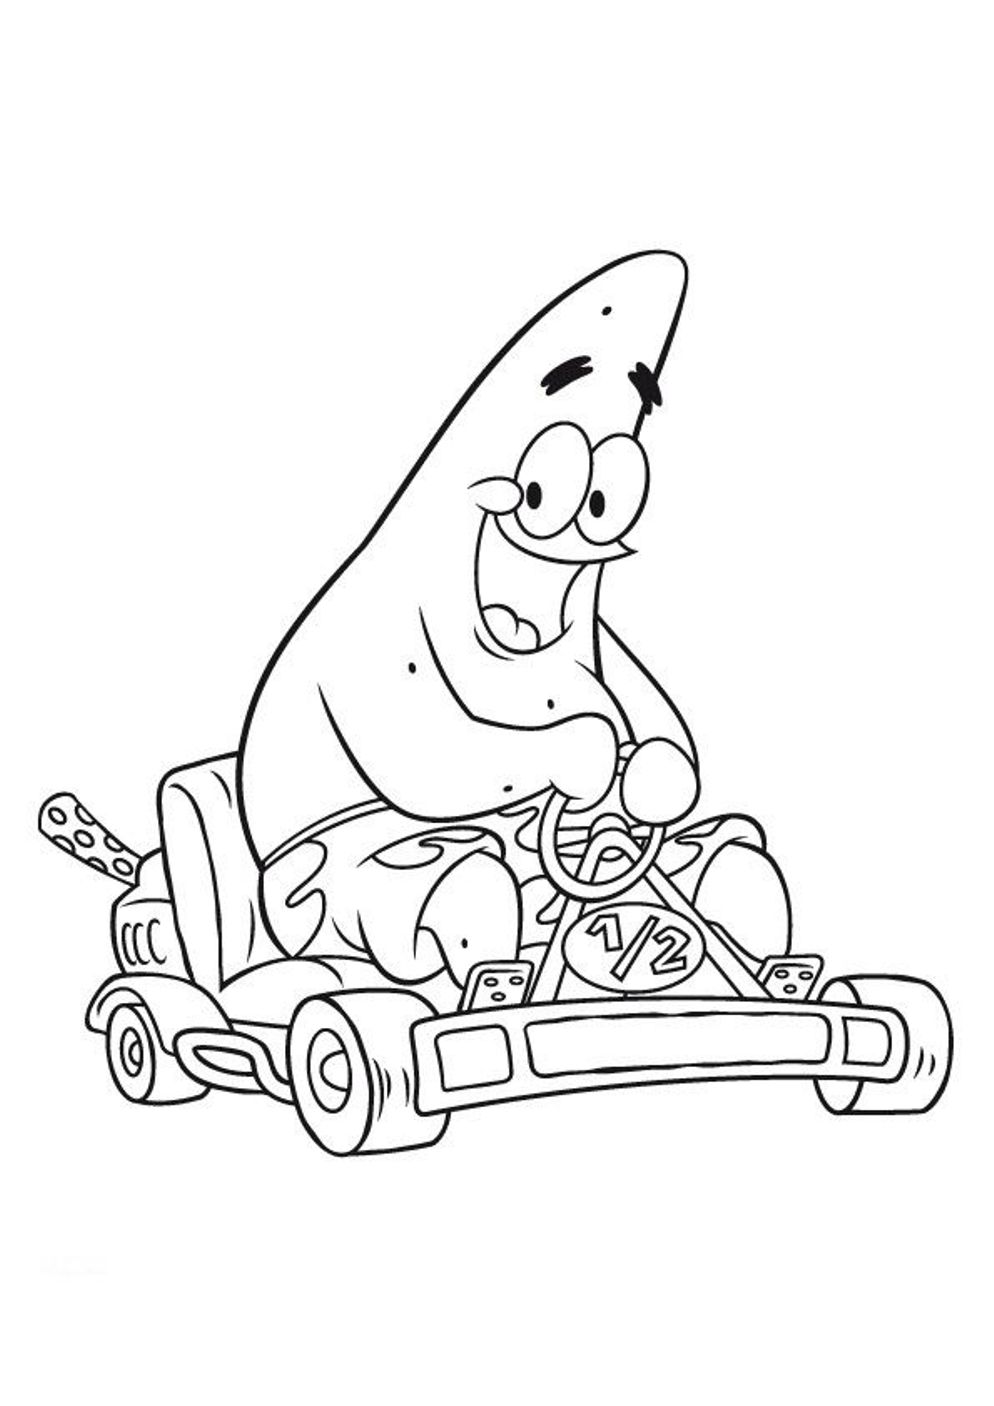 Patrick Star Riding Spongebob Printable Coloring Page